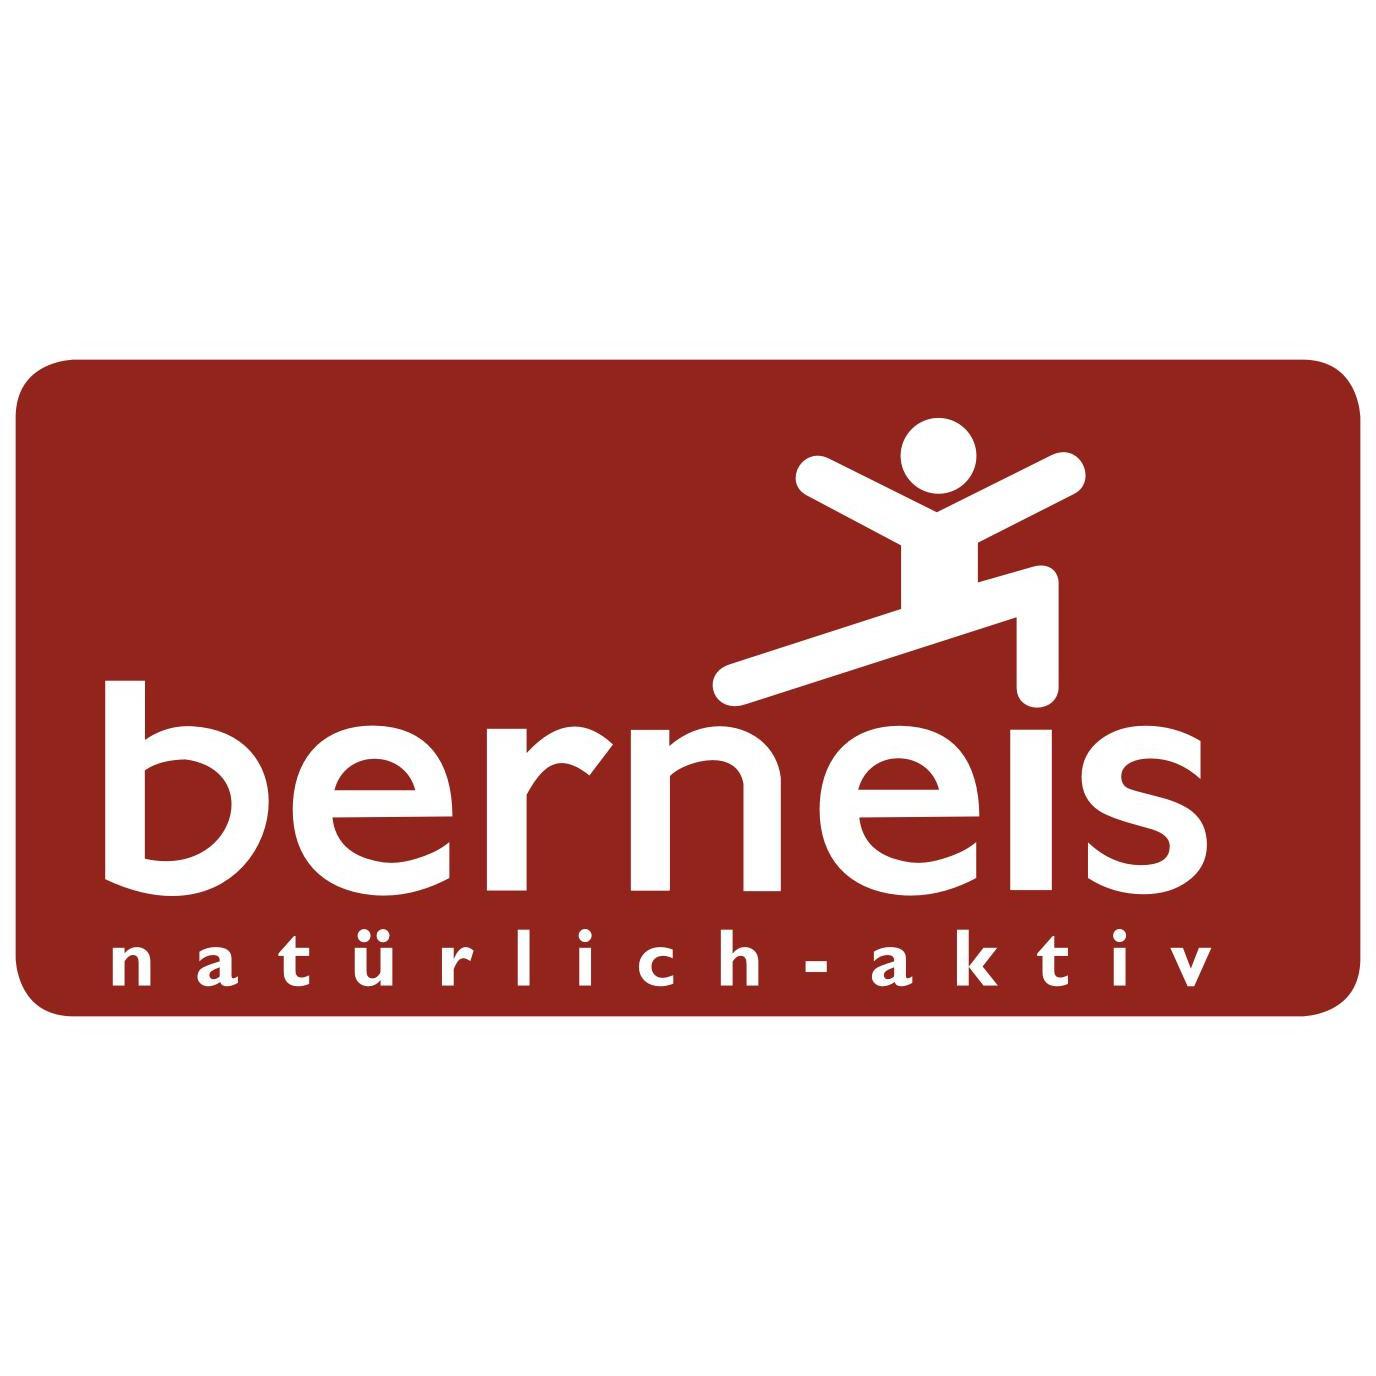 berneis natürlich-aktiv Logo